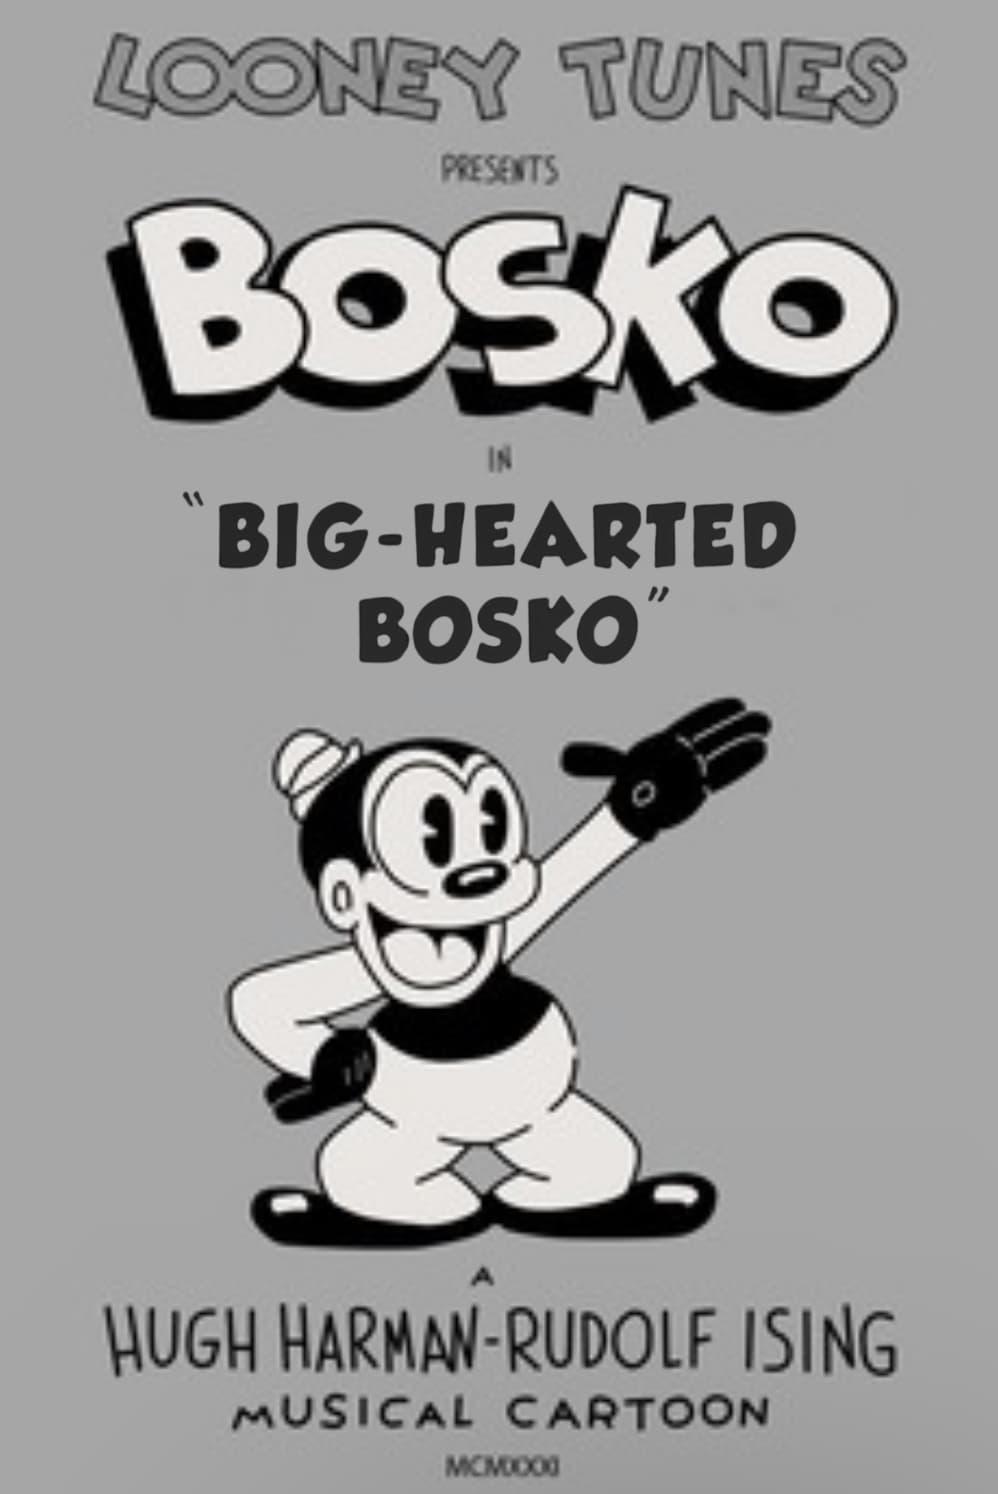 Big-Hearted Bosko poster